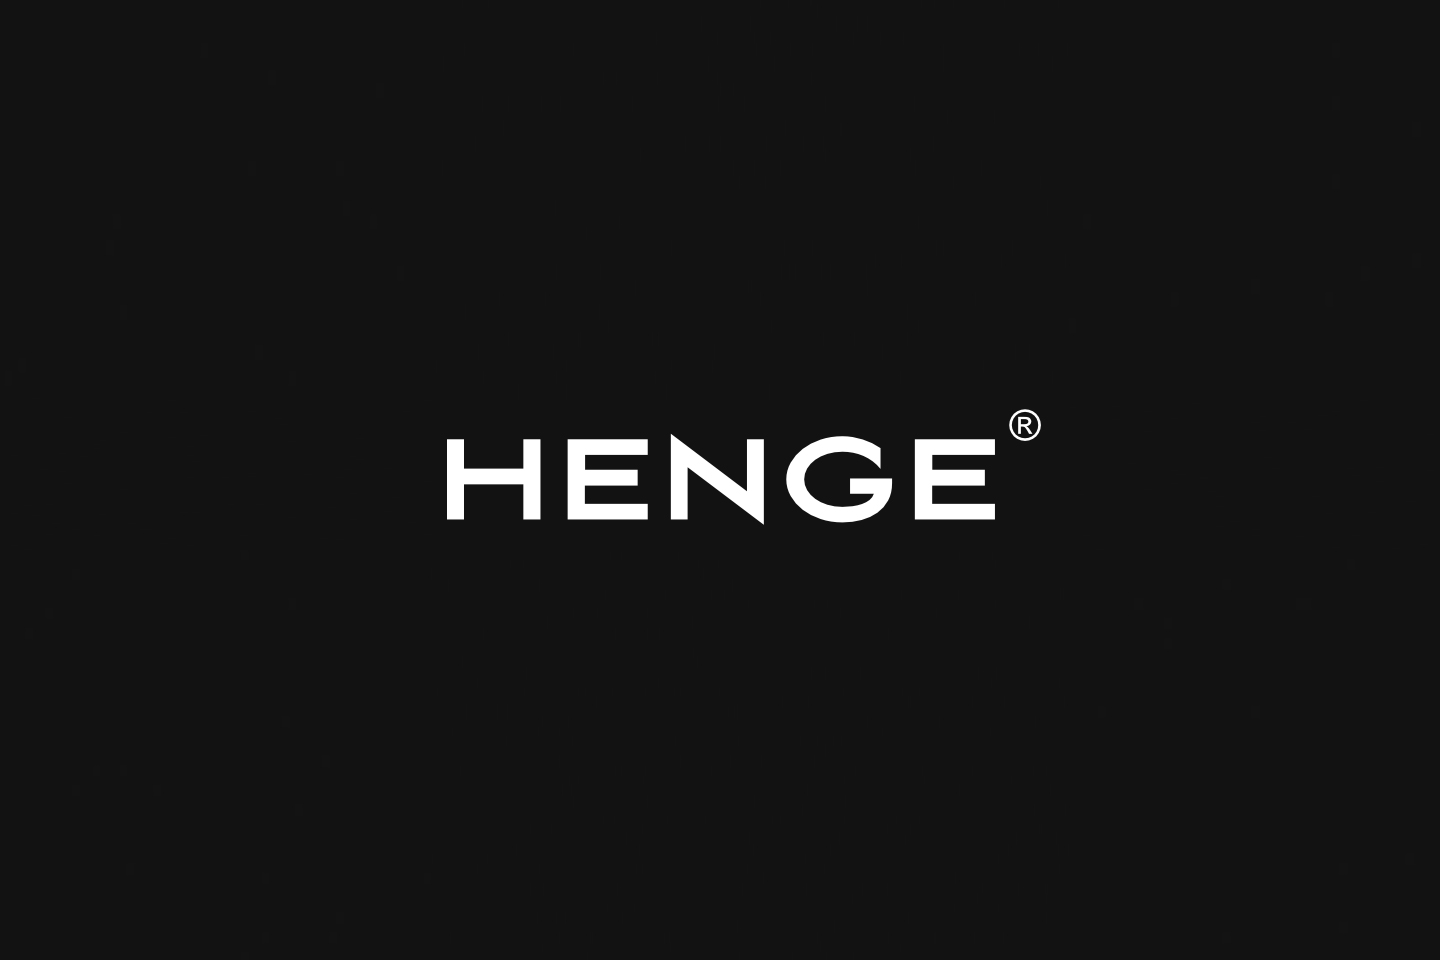 Henge logo